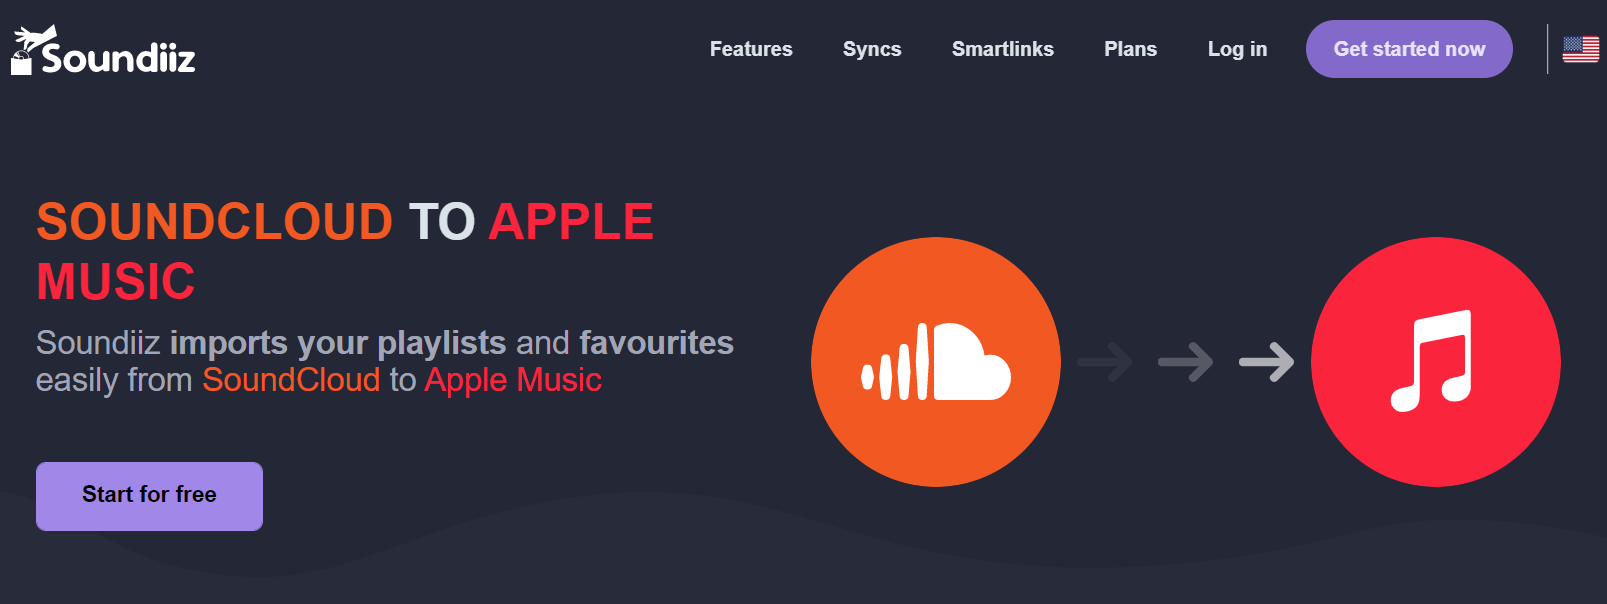 Soundiiz Soundcloud vers Apple Music